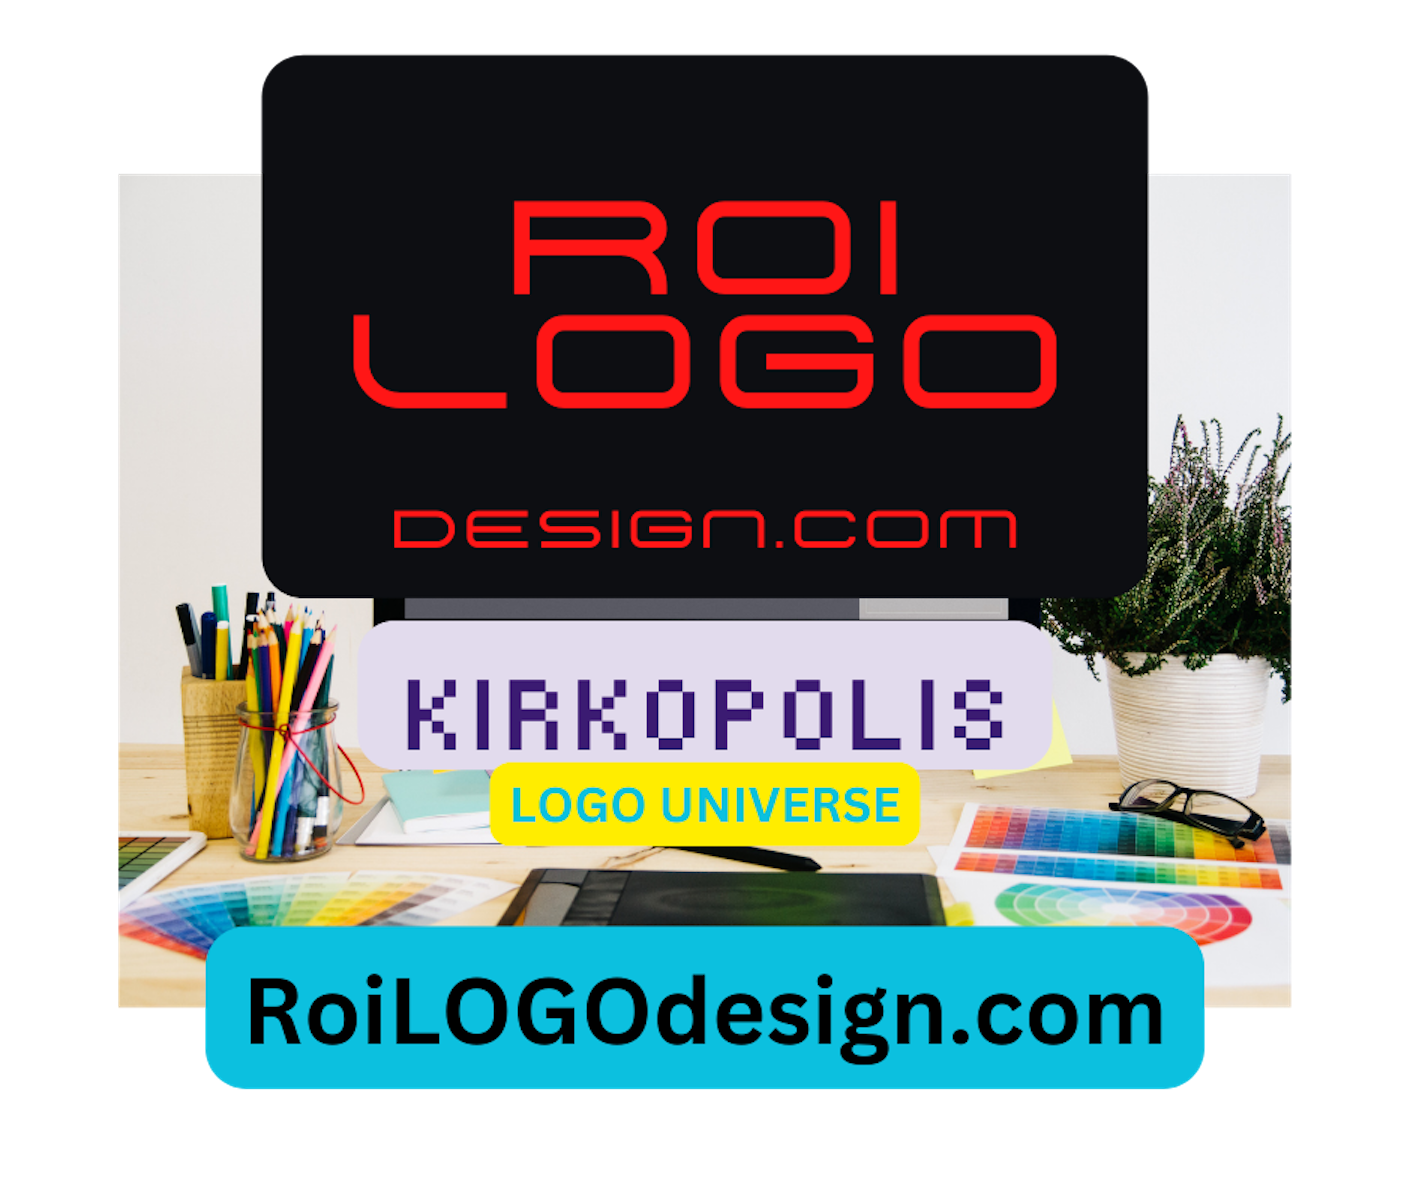 ROI Return on Investment Logos Web Design SEO SMO<br />
https://roilogodesign.com/